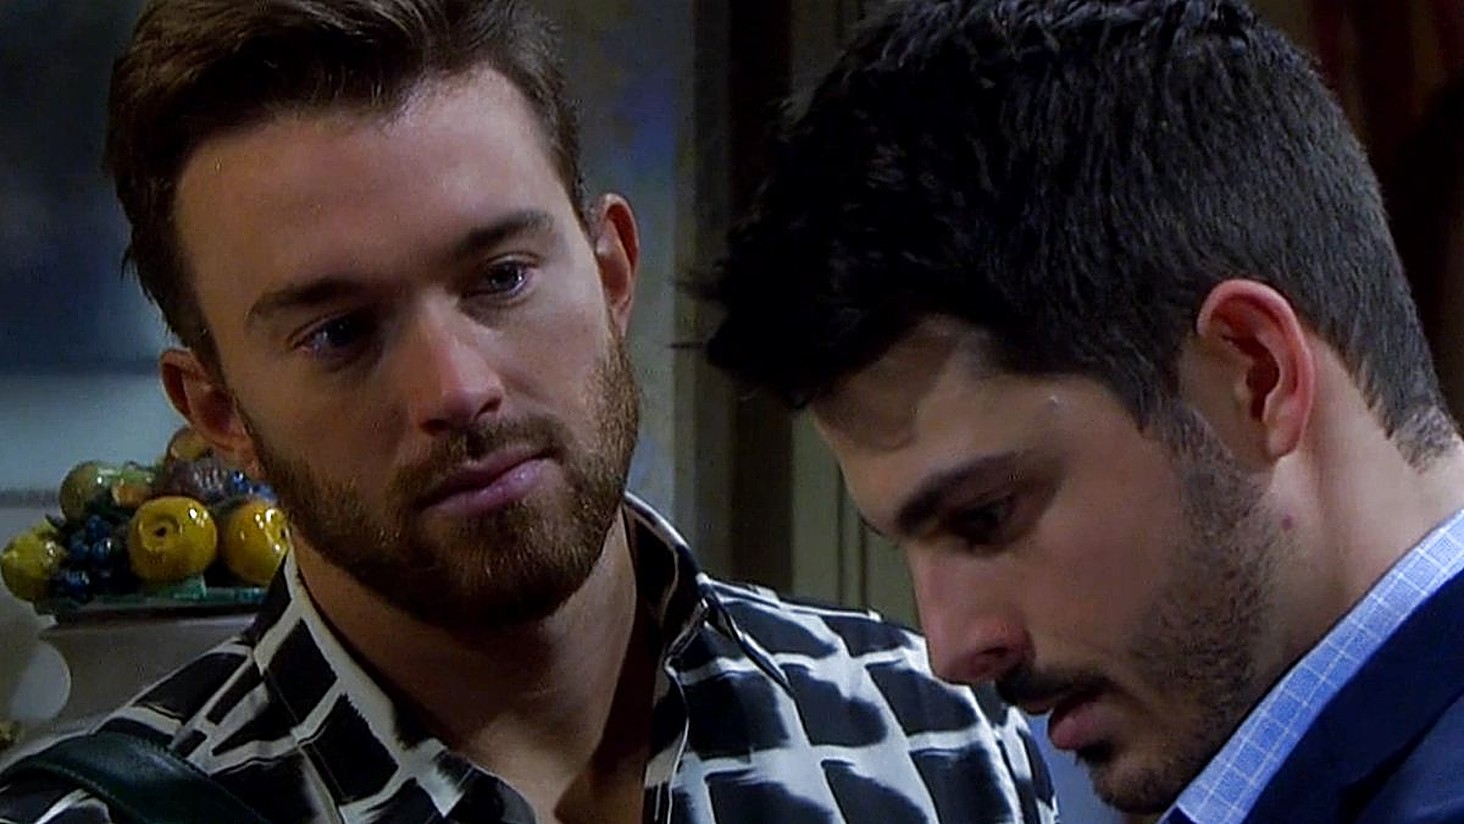 DOOL/Will (Chandler Massey) fears about Sonny's (Zach Ticker) bond with Leo